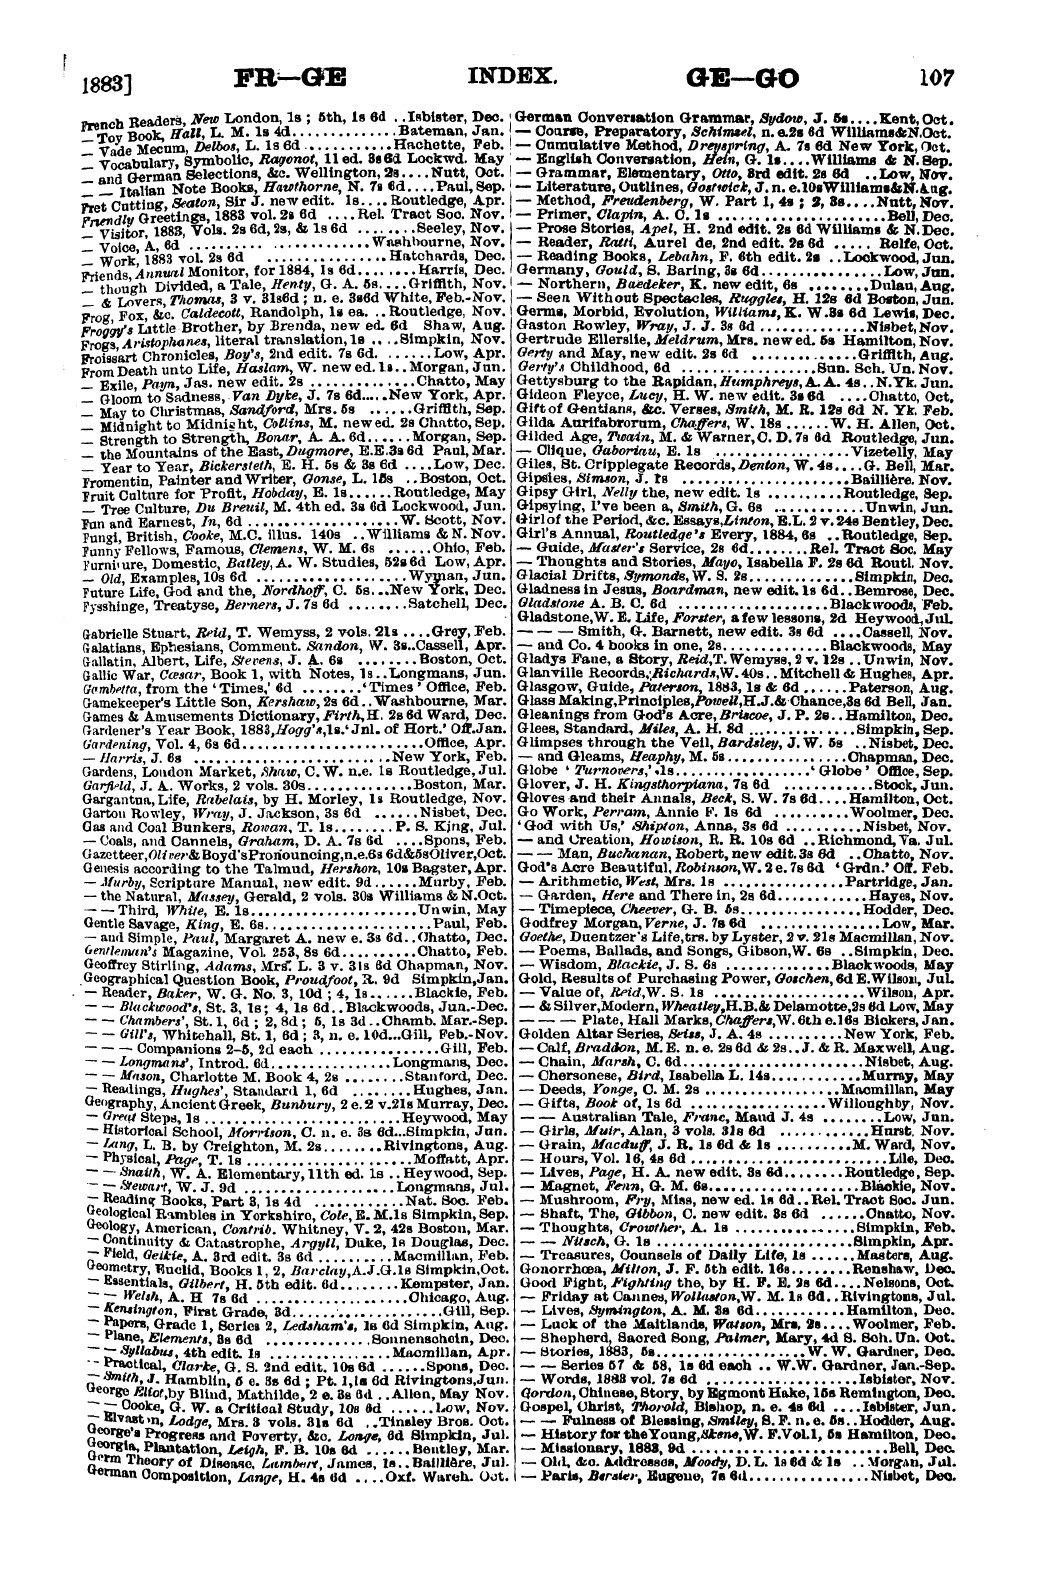 Publishers’ Circular (1880-1890): jS F Y, 1st edition: 109